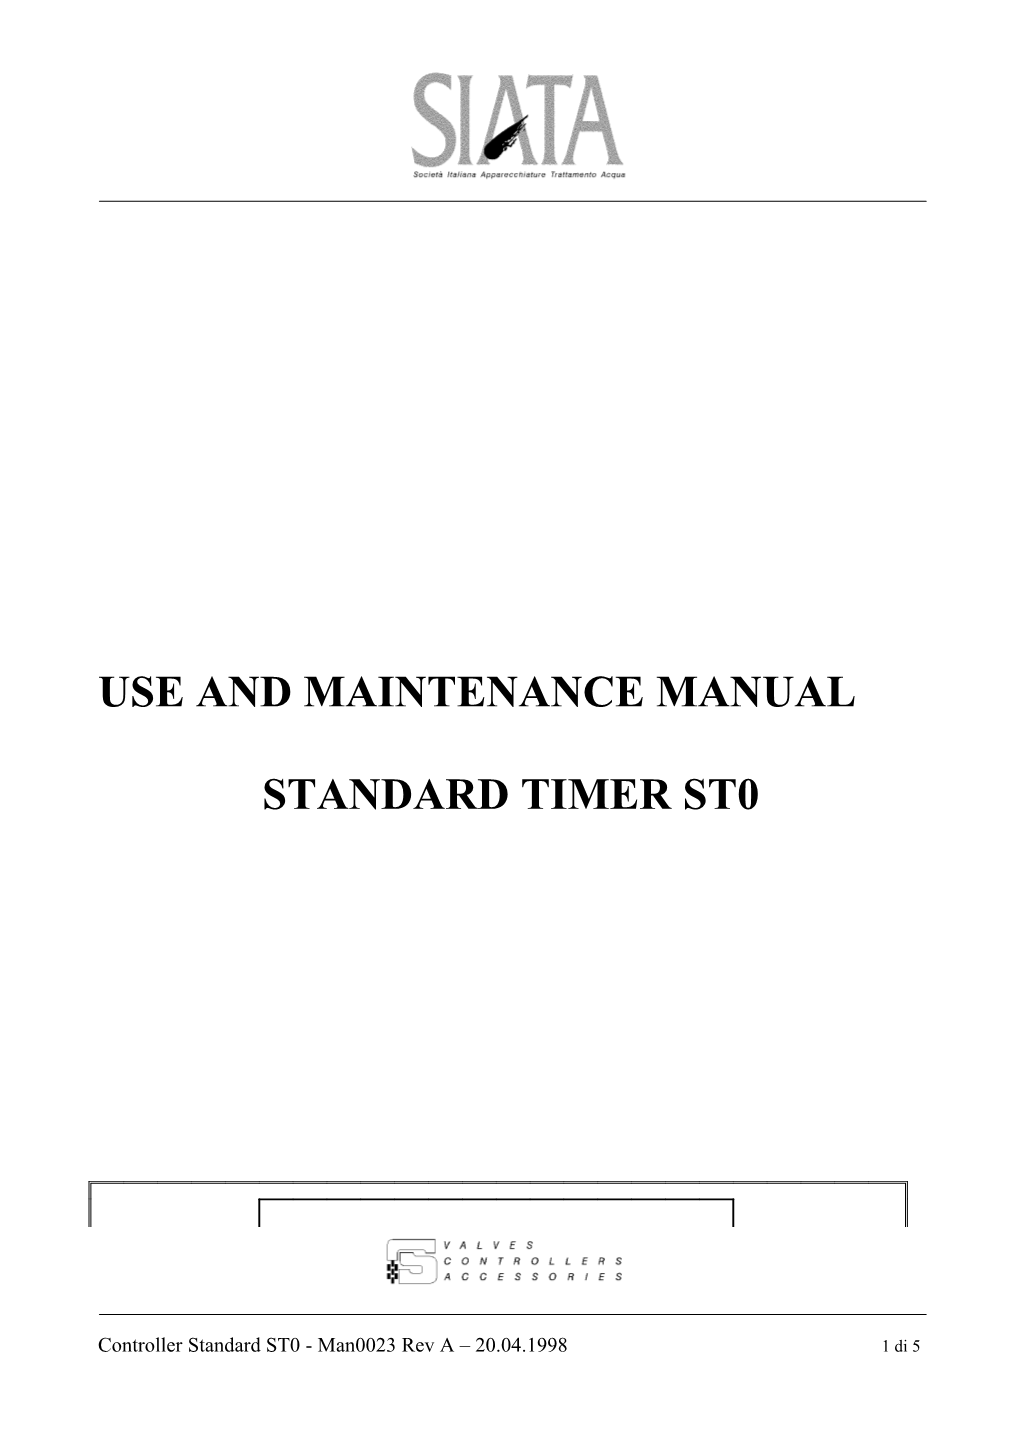 Use and Maintenance Manual